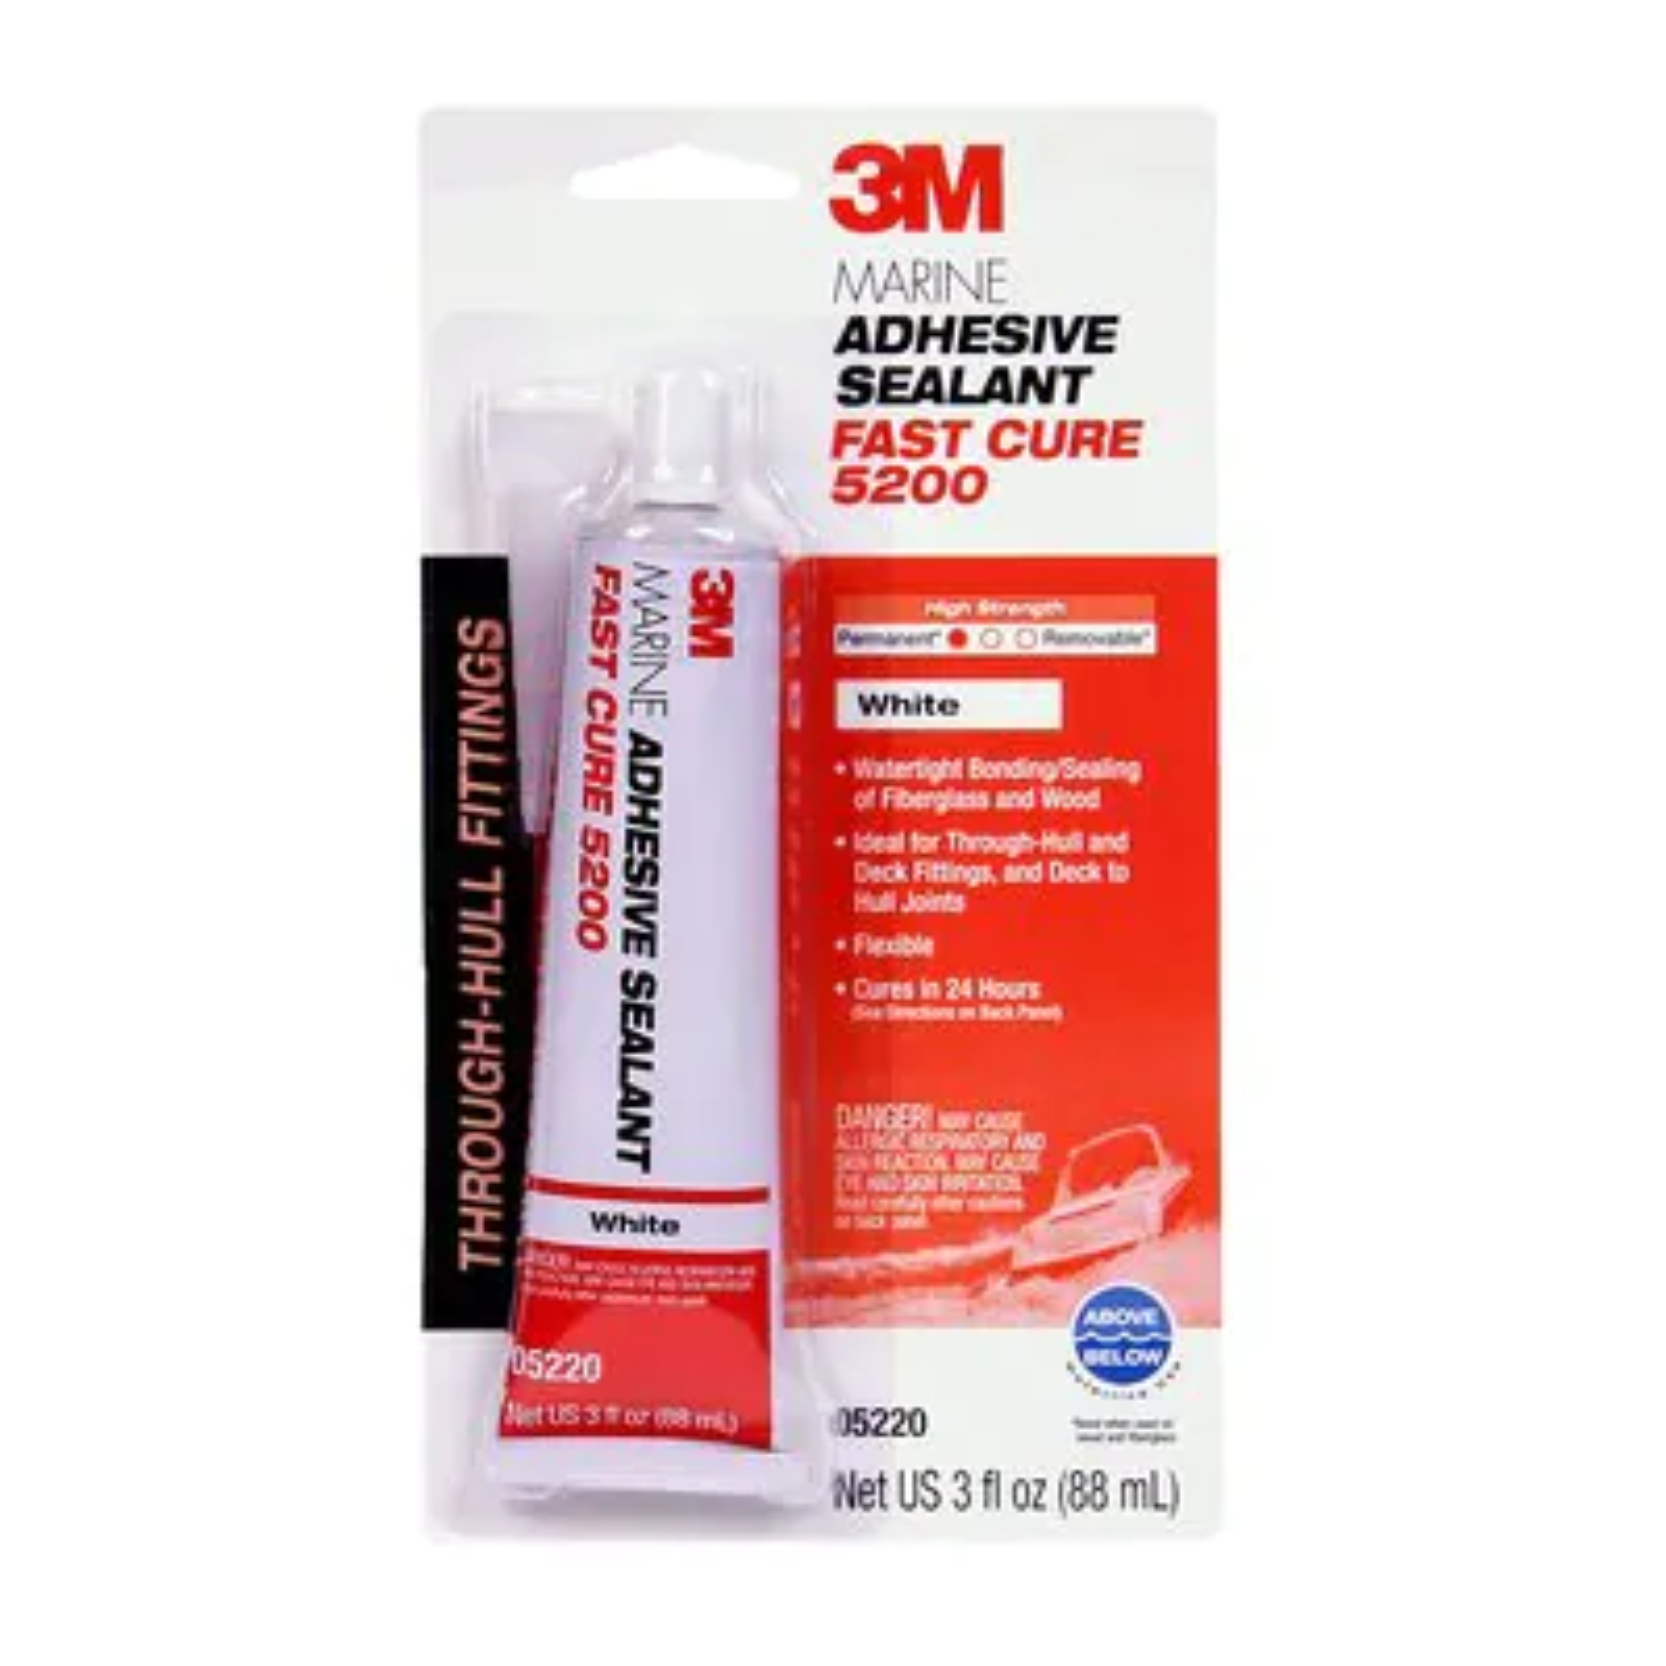 3M Marine Adhesive Sealant (5200 - Fast Cure)